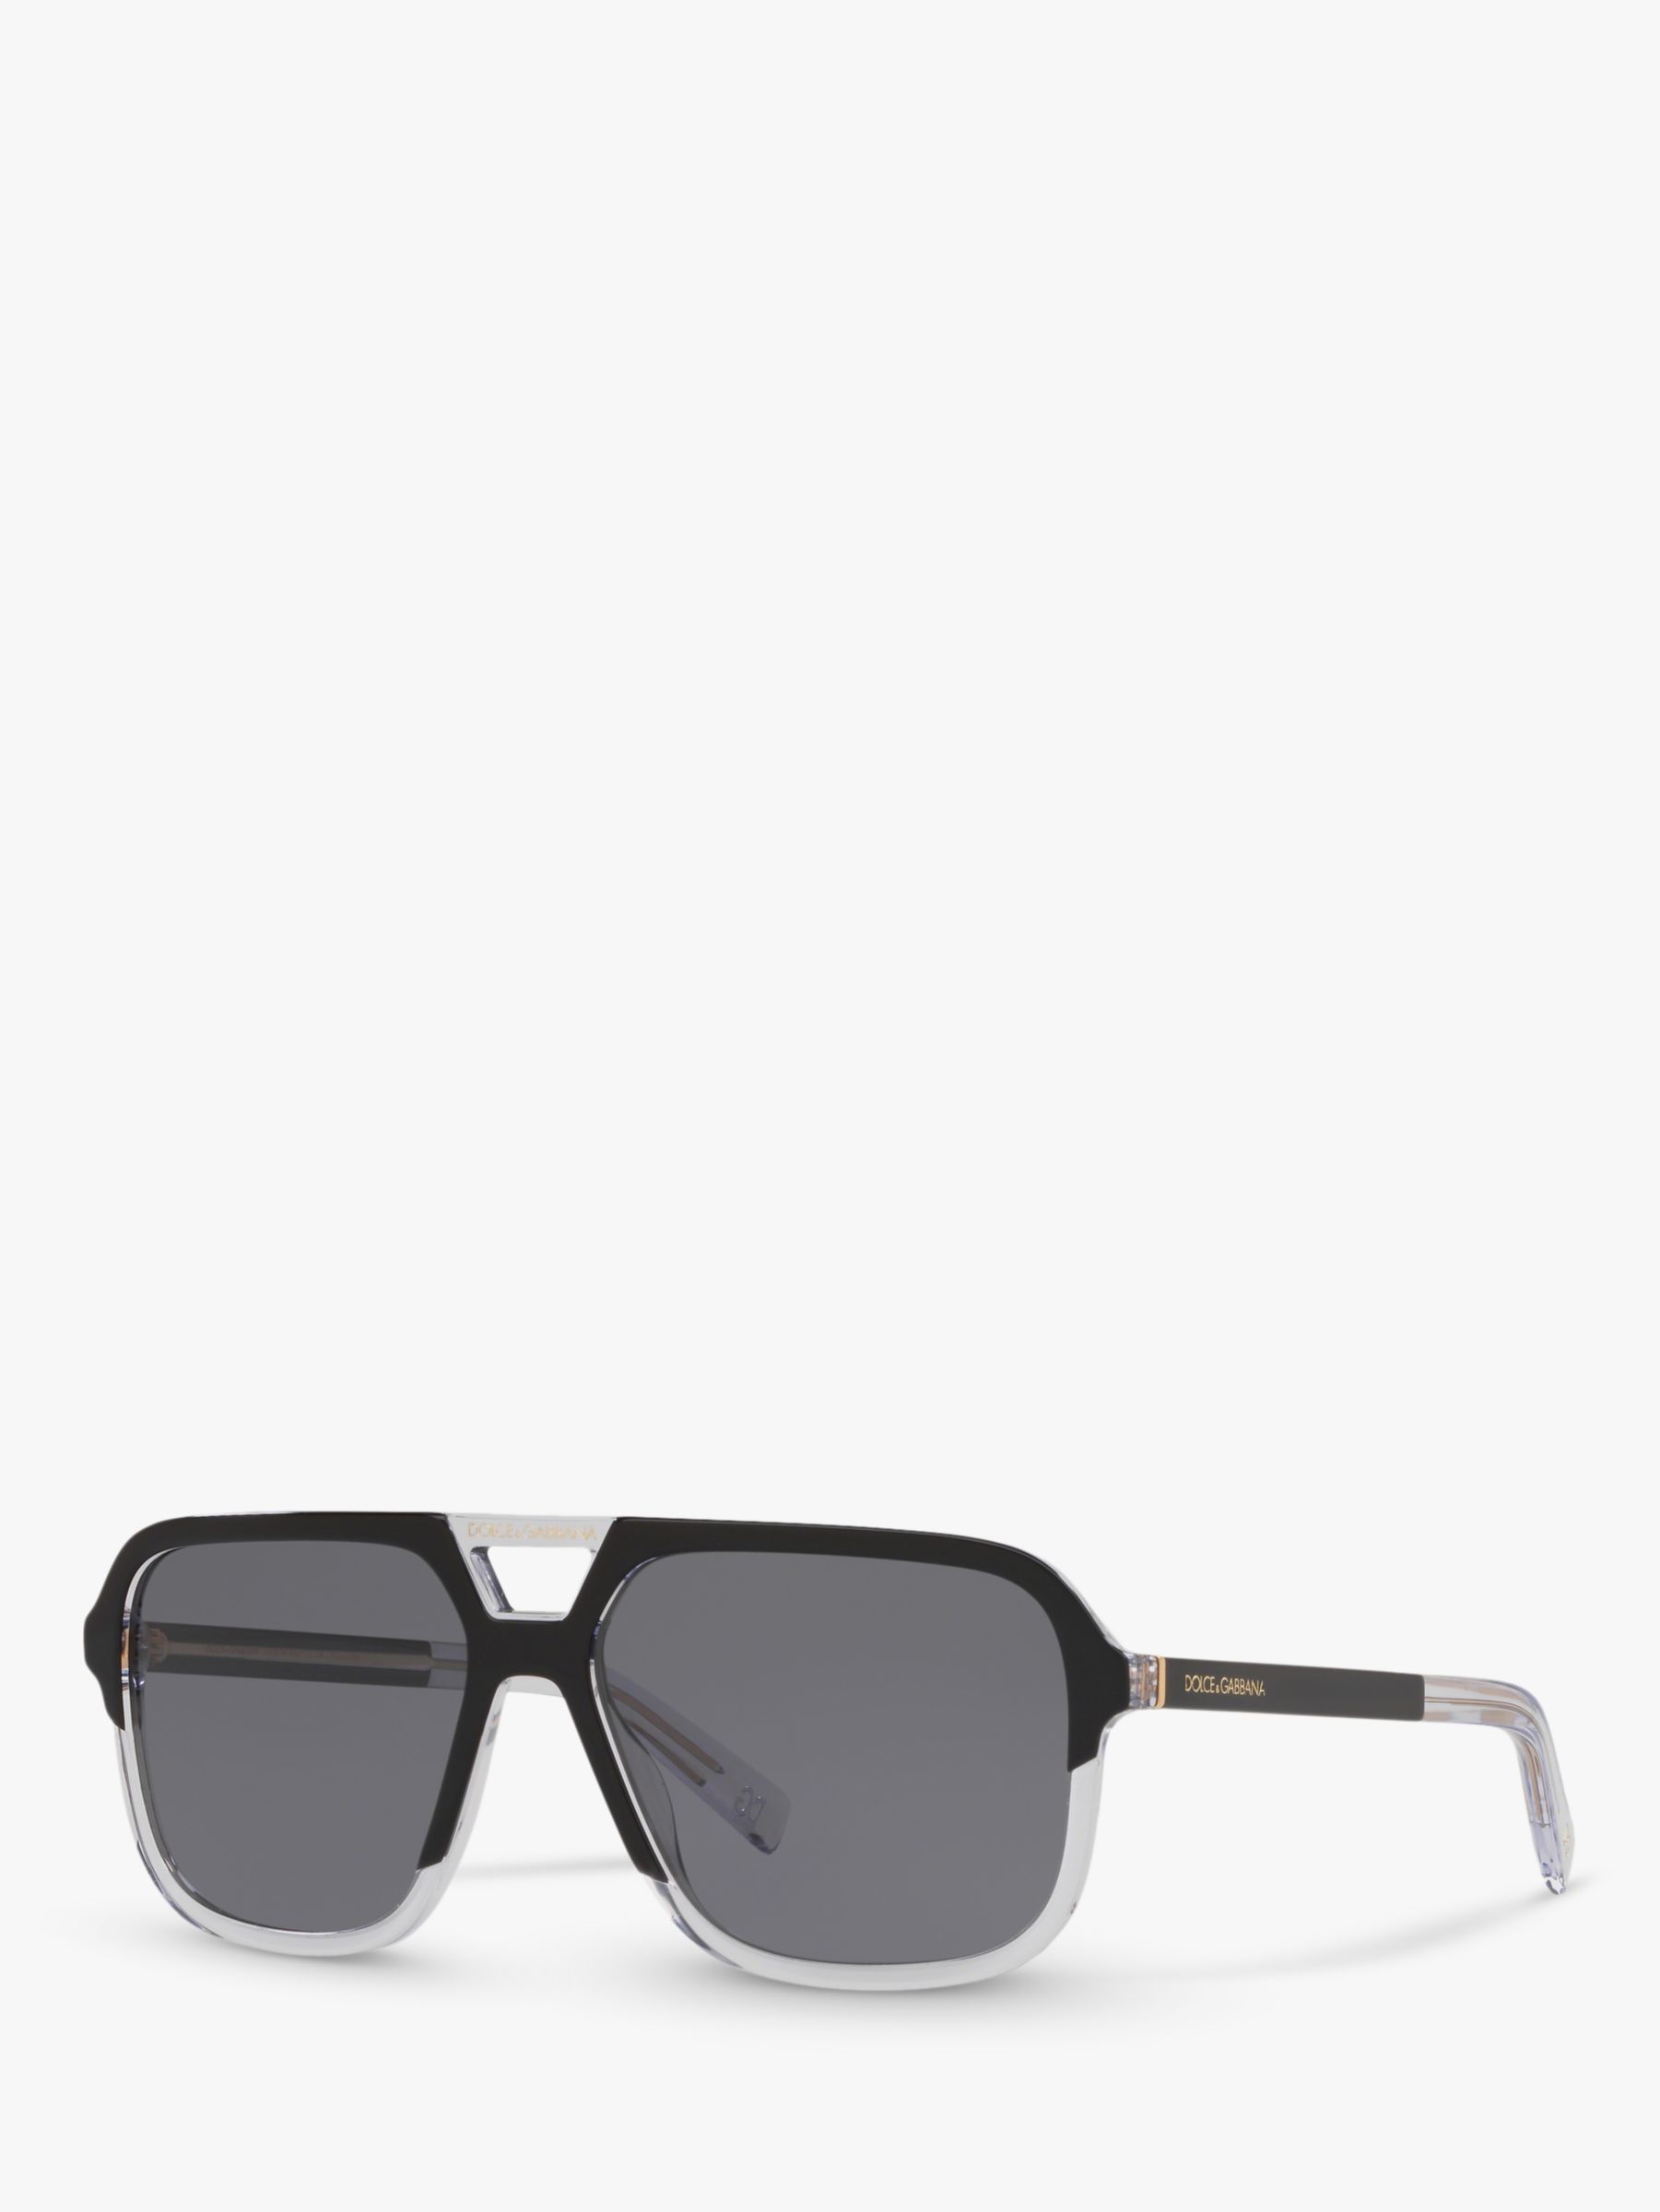 Dolce & Gabbana DG4354 Men's Polarised Square Sunglasses, Black Clear/Grey  at John Lewis & Partners